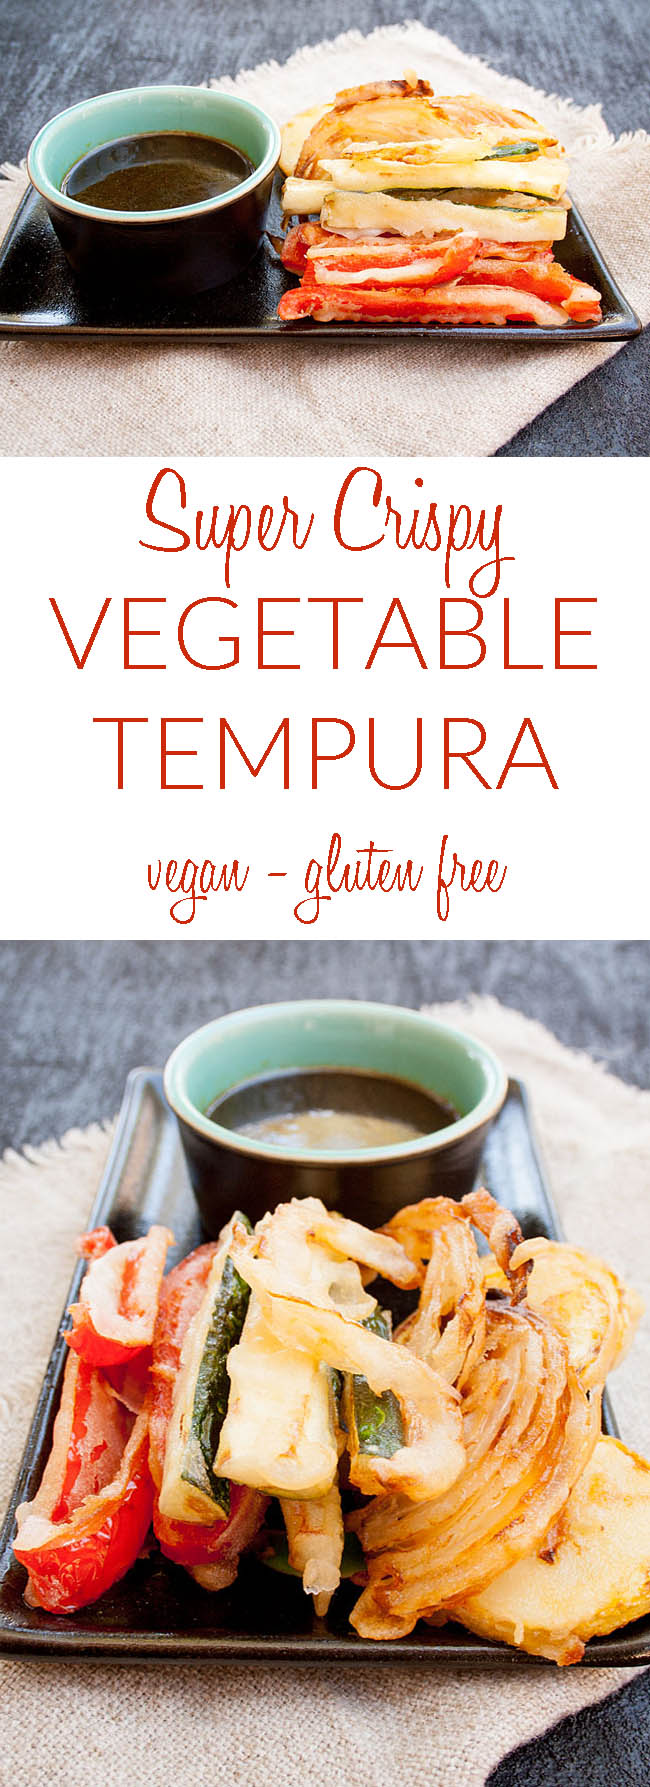 Gluten Free Vegan Tempura collage photo with text.